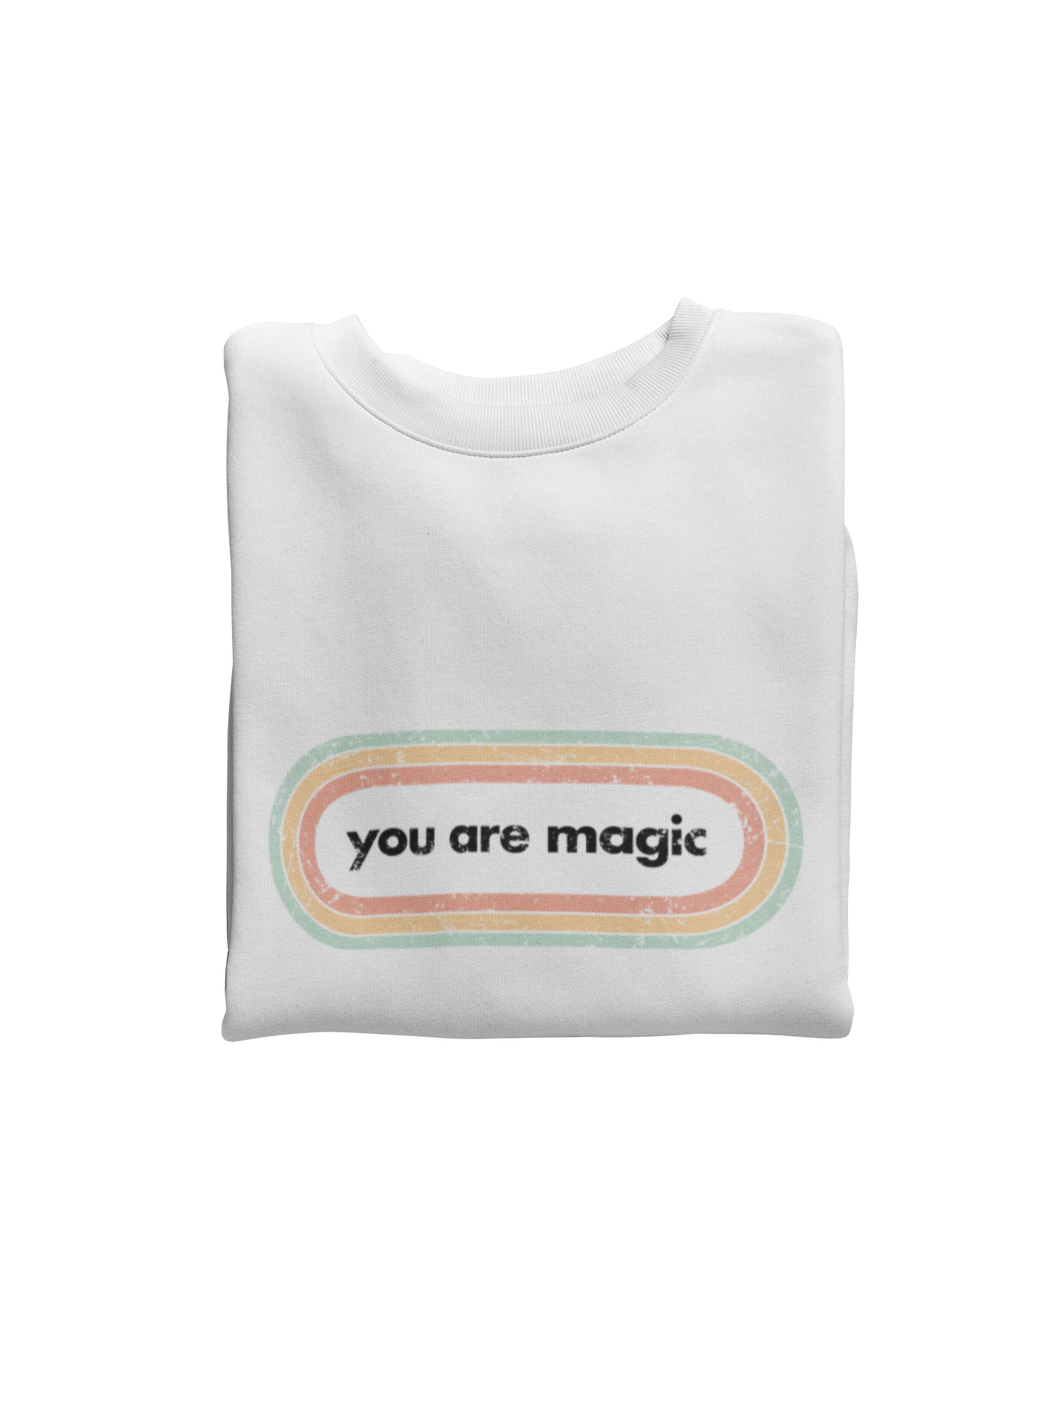 You are Magic Sweatshirt - Vintage Style